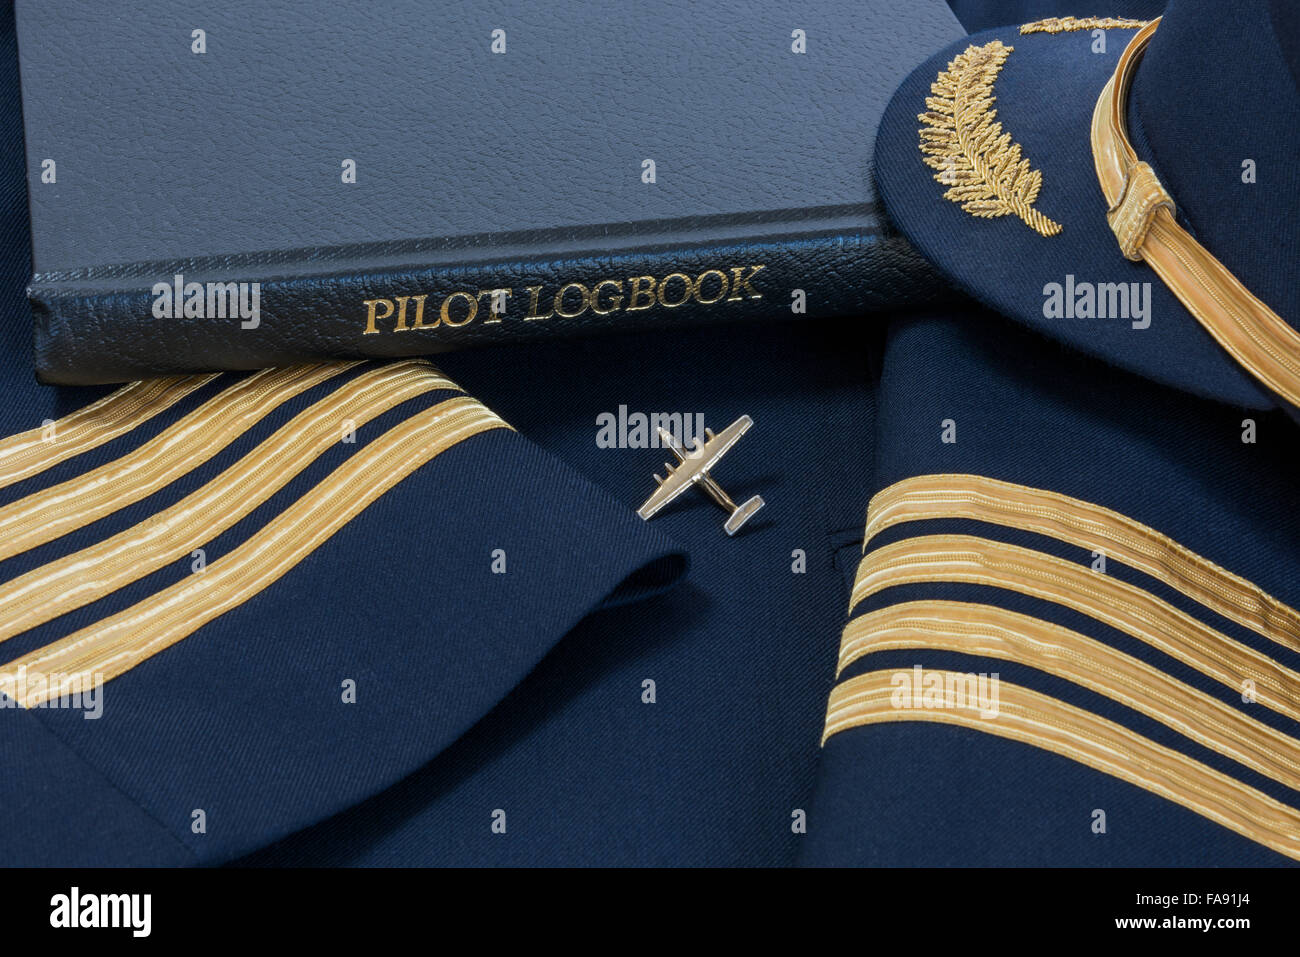 Pilot logbook - Airline Transport Pilot logbook - Professional Logbook Stock Photo